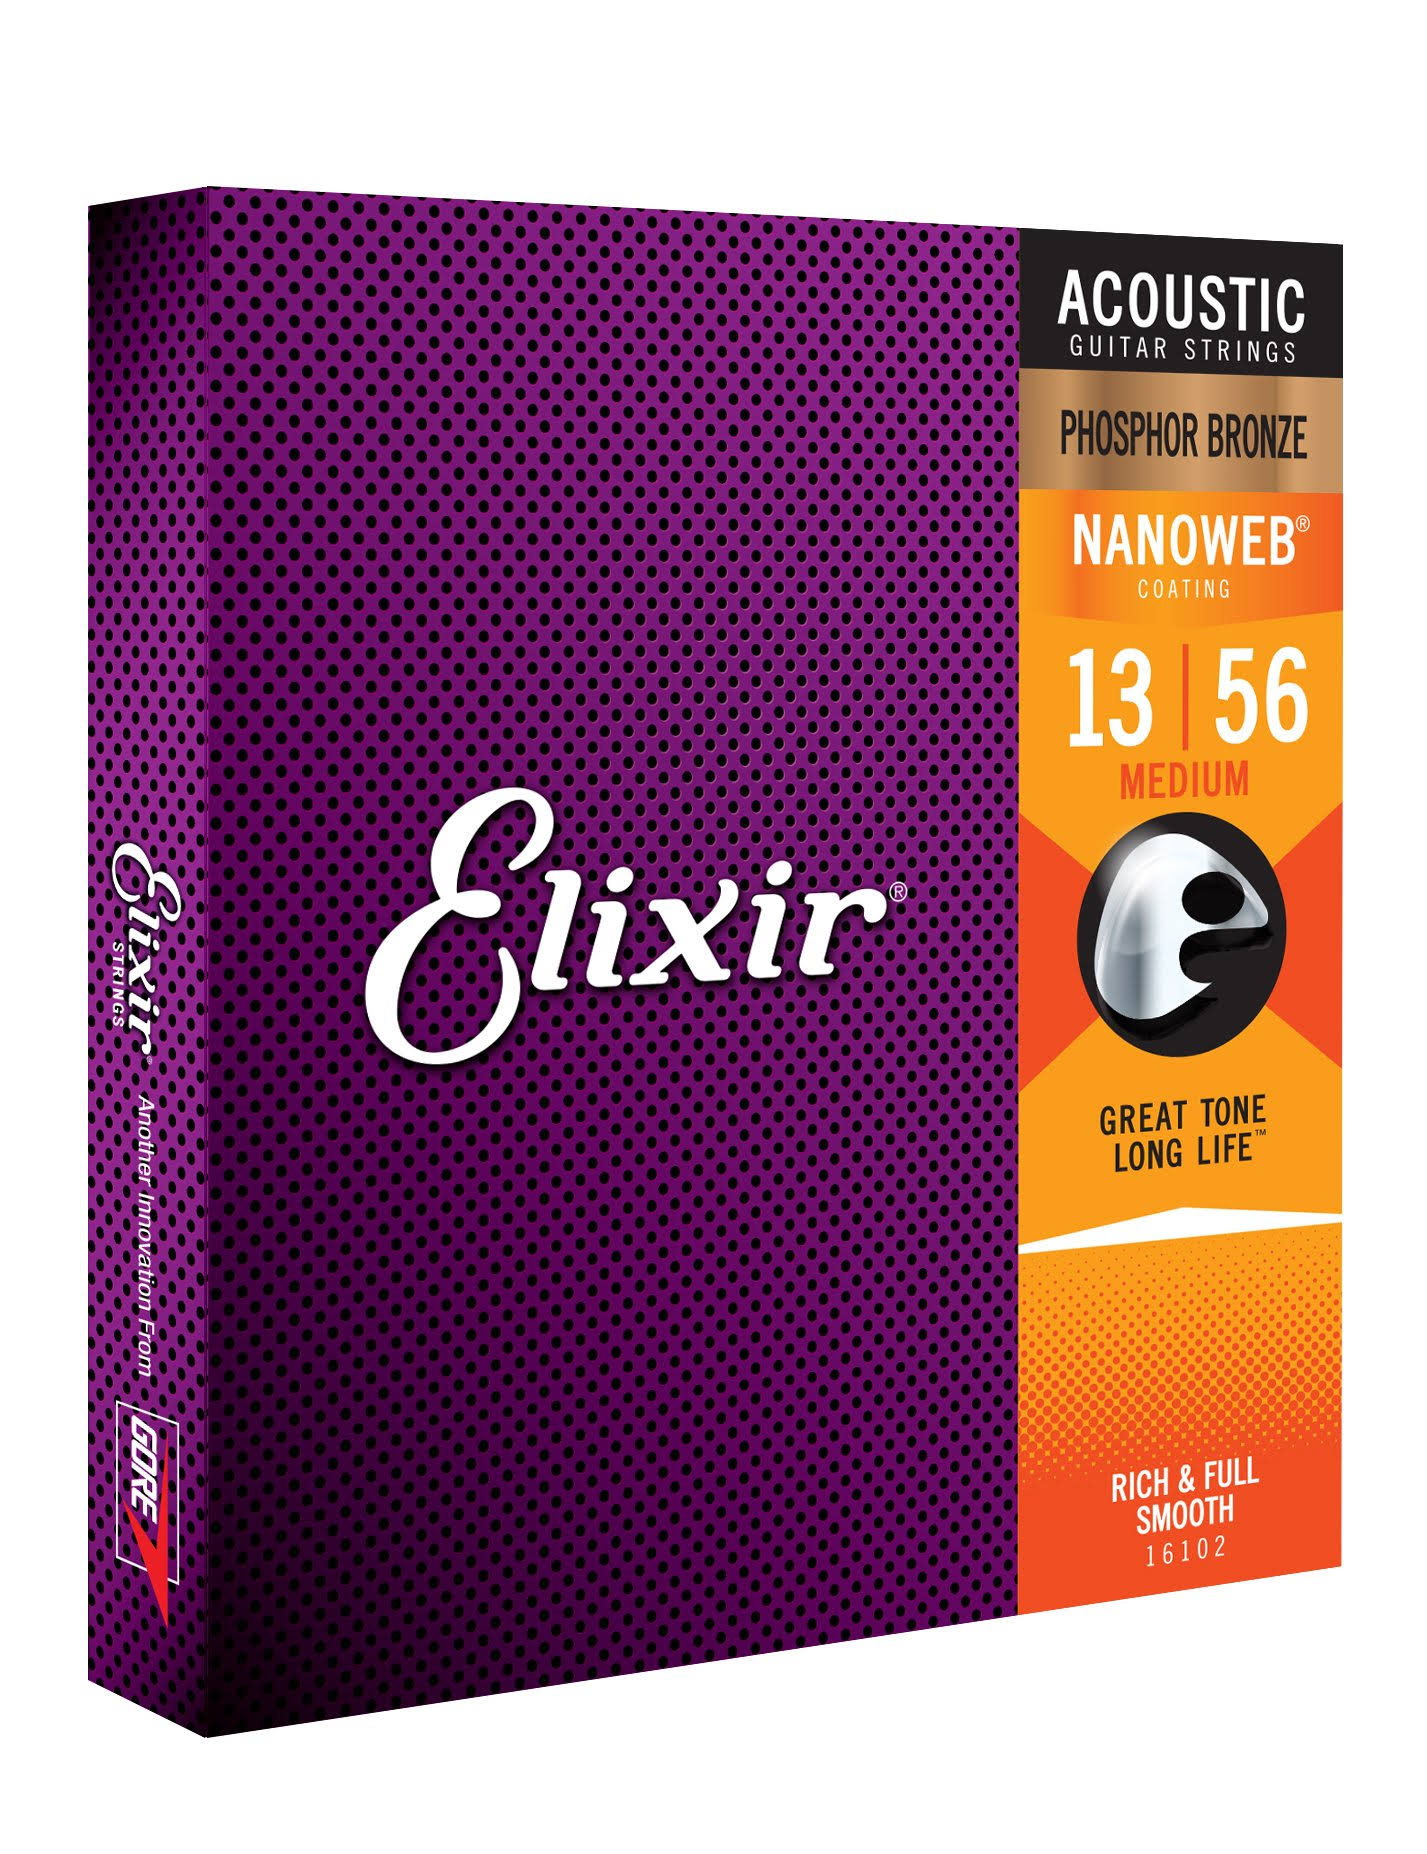 Elixir Acoustic Phosphor Bronze Guitar Strings with Nanoweb Coating - Medium